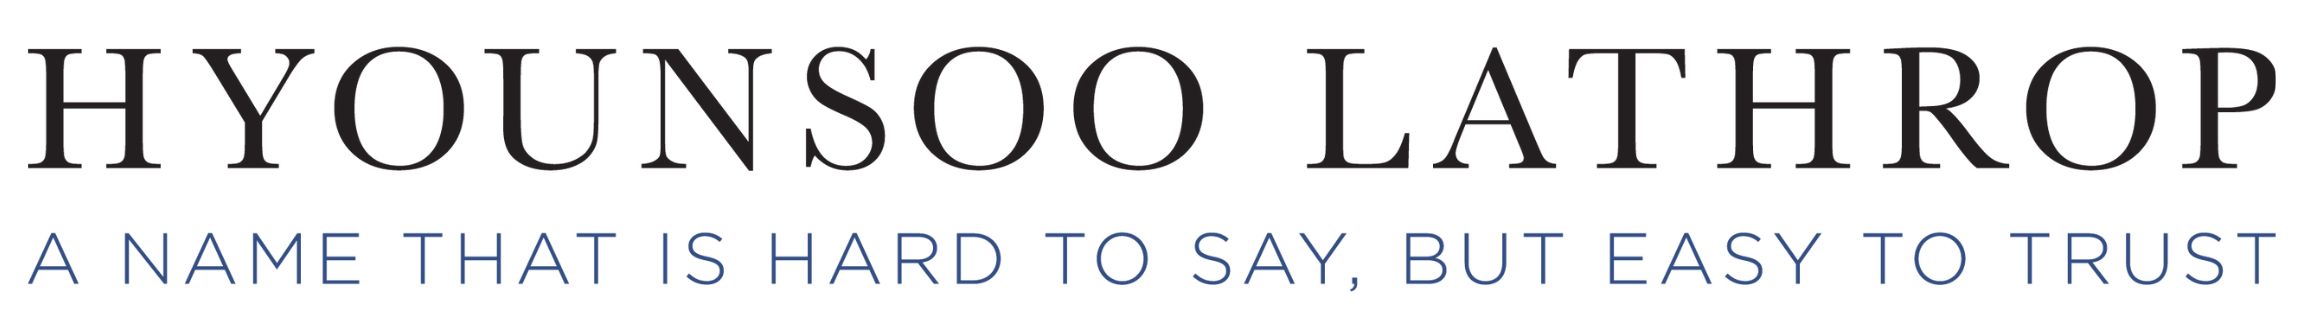 LOGO Name and slogan